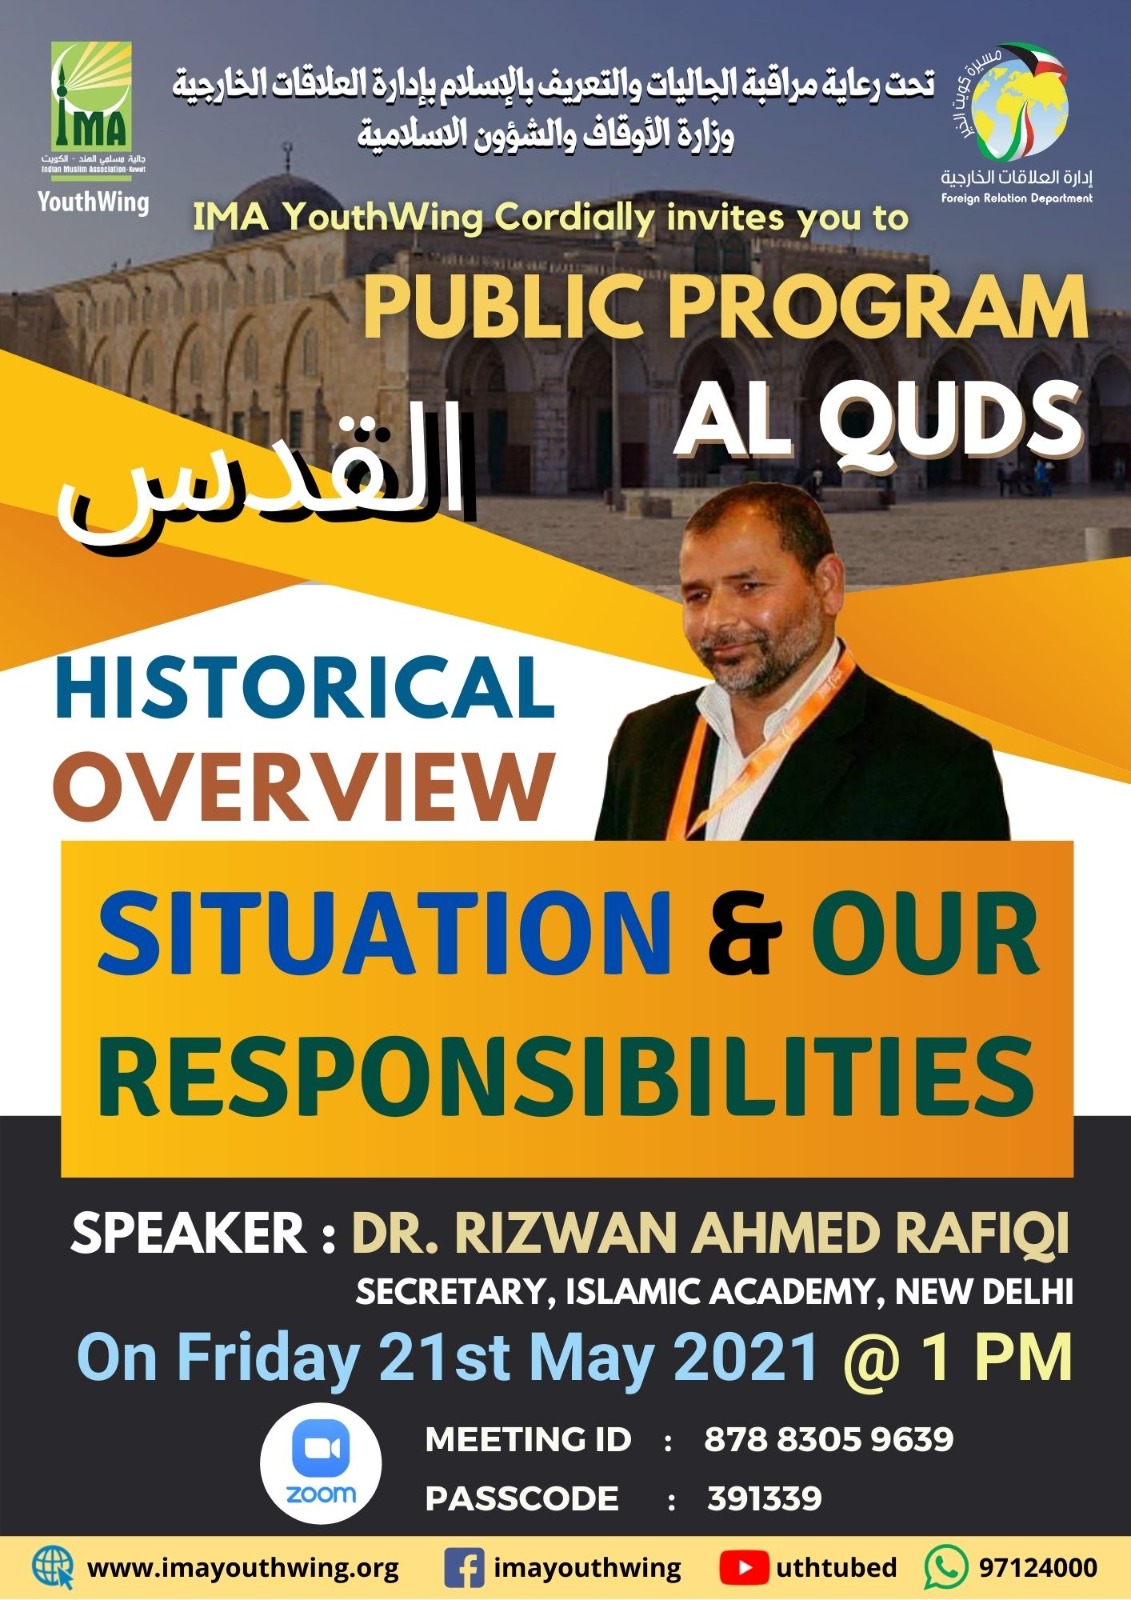 Public Program AL QUDS – HISTORY OVERVIEW, SITUATION & OUR RESPONSIBILITIES